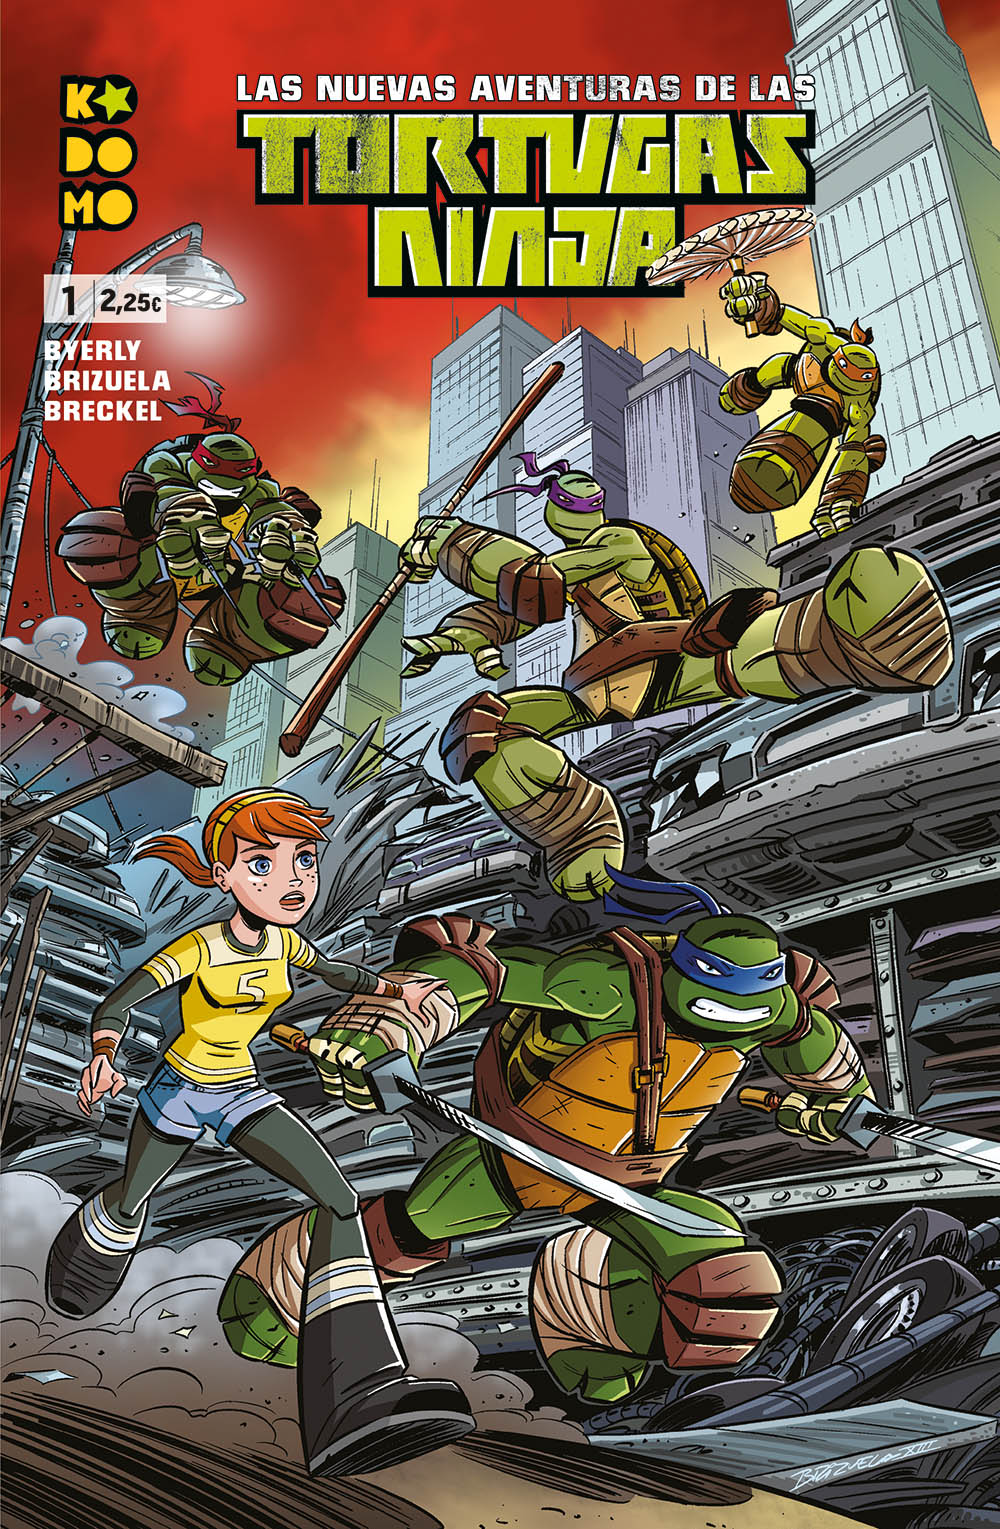 Las nuevas aventuras de las Tortugas Ninja #01